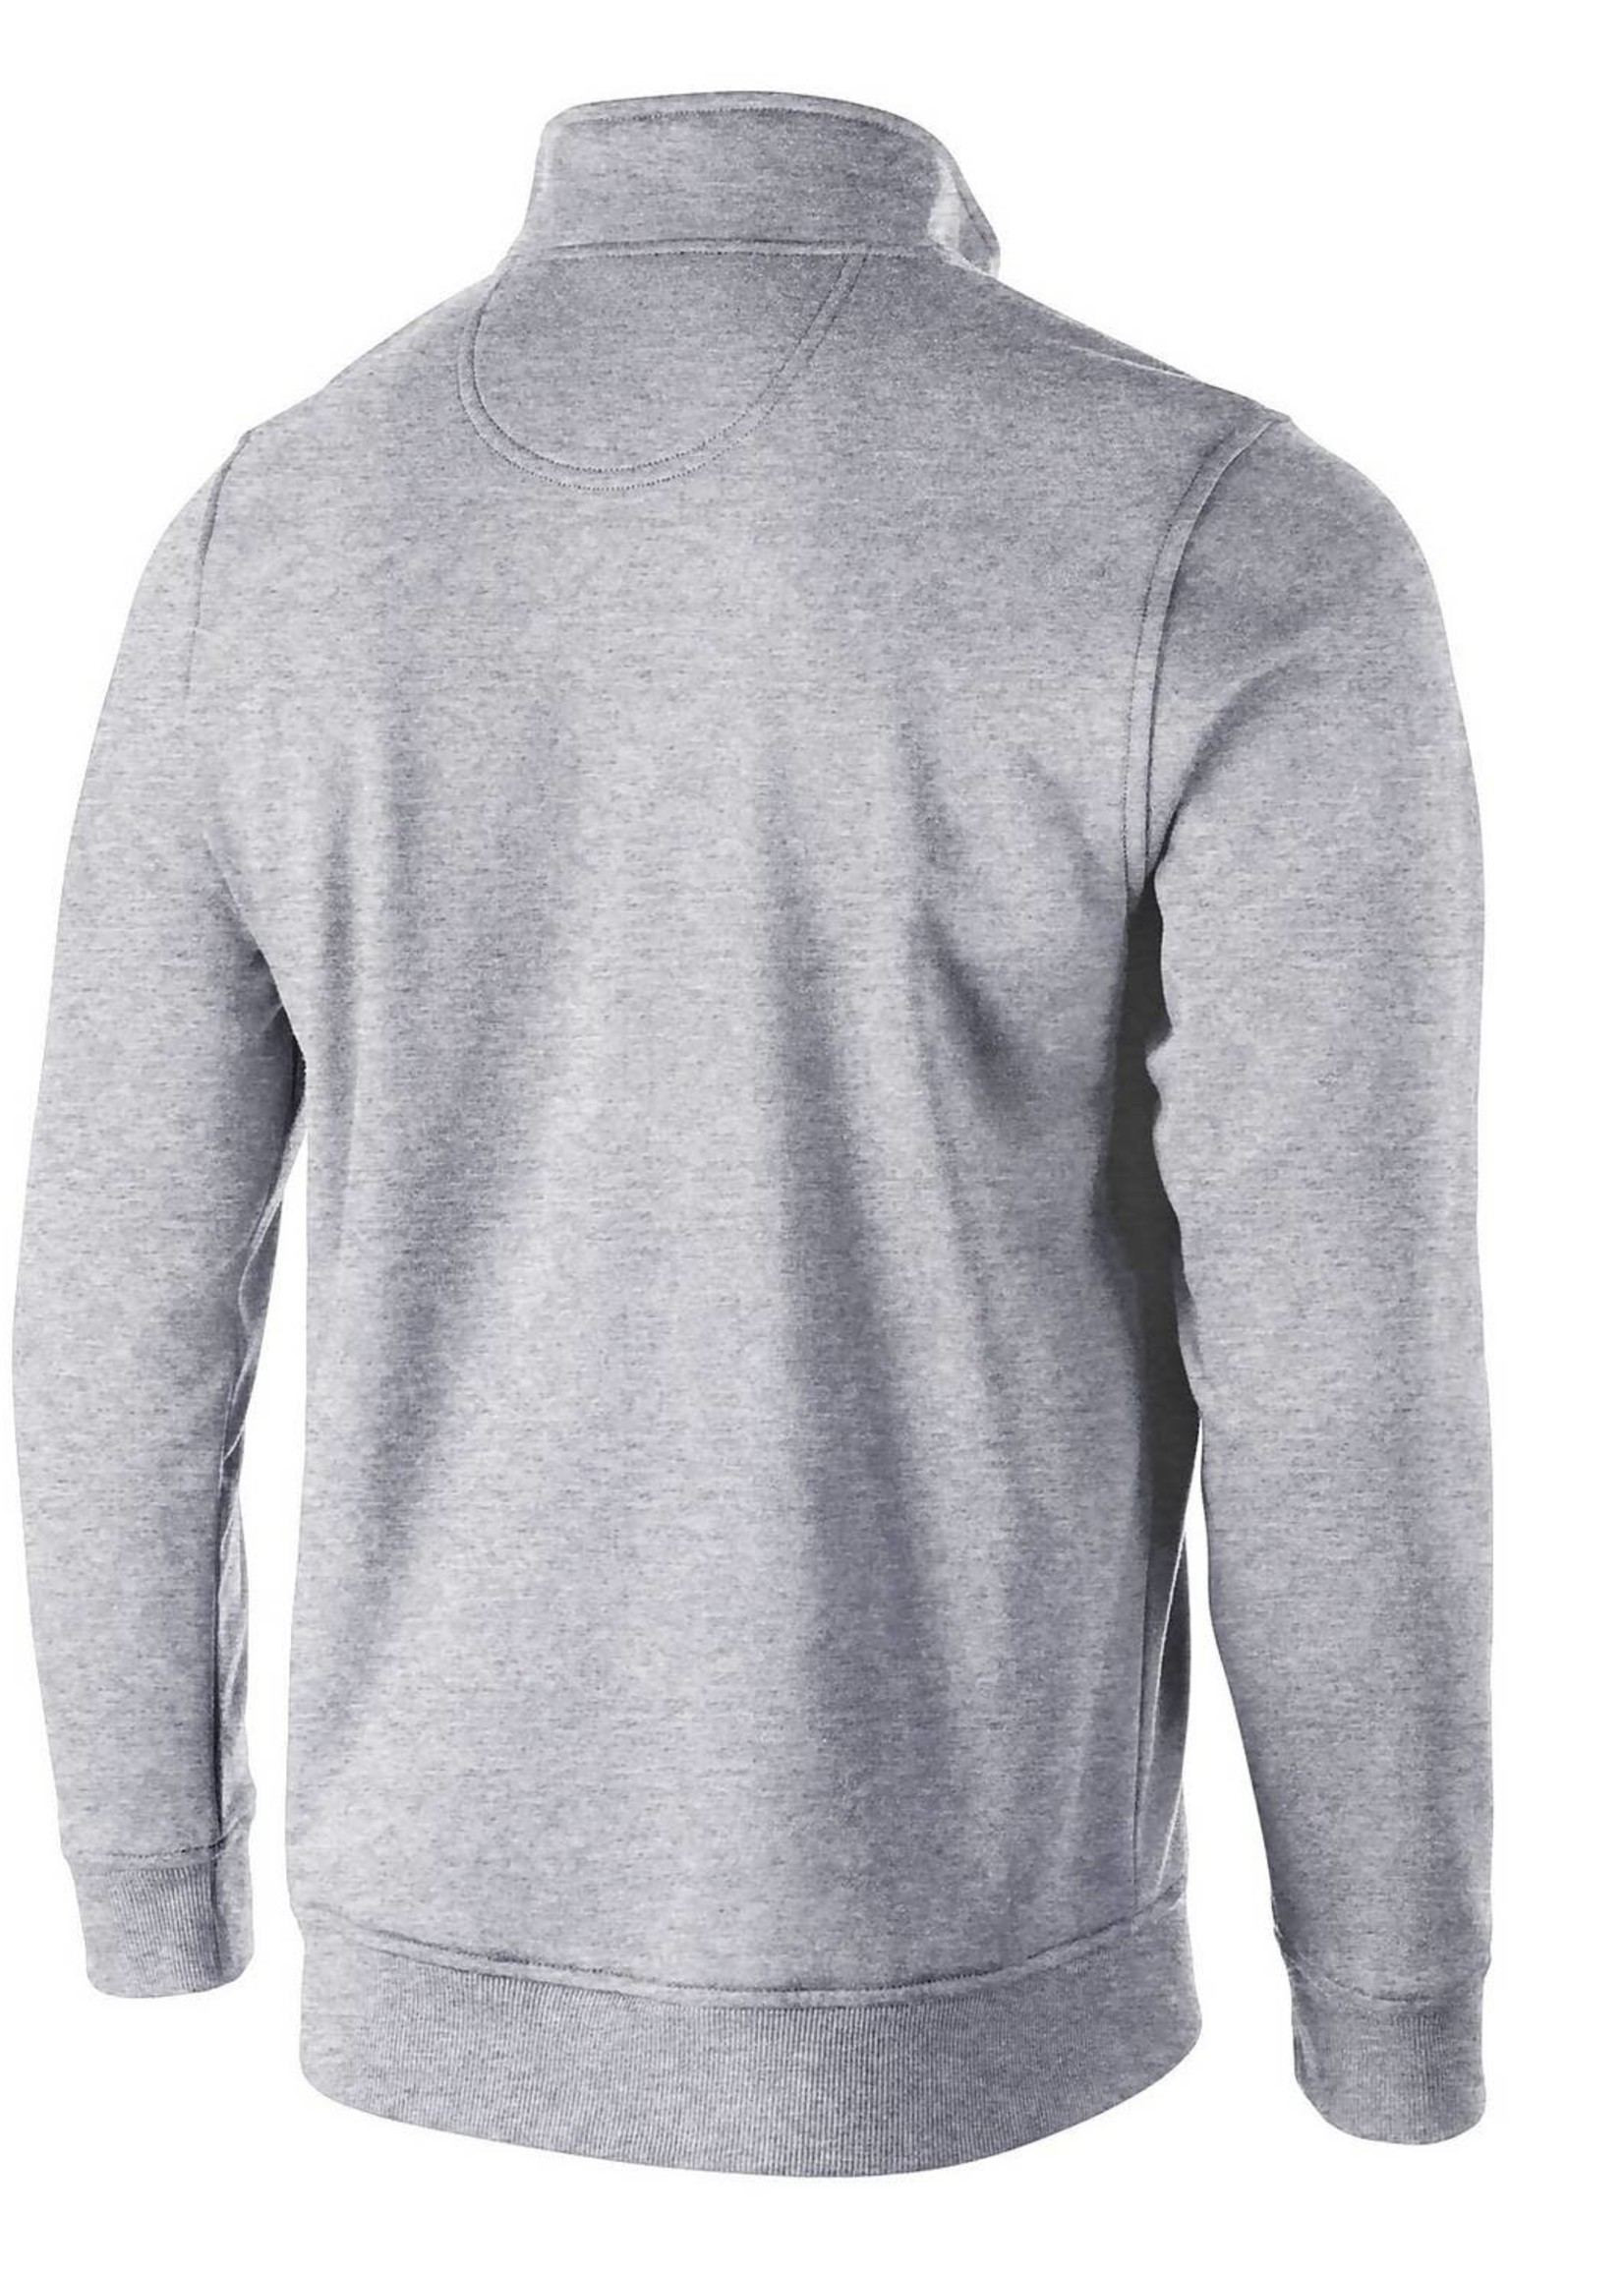 1/4 Zip Fleece Sweatshirt 069 Heather Grey